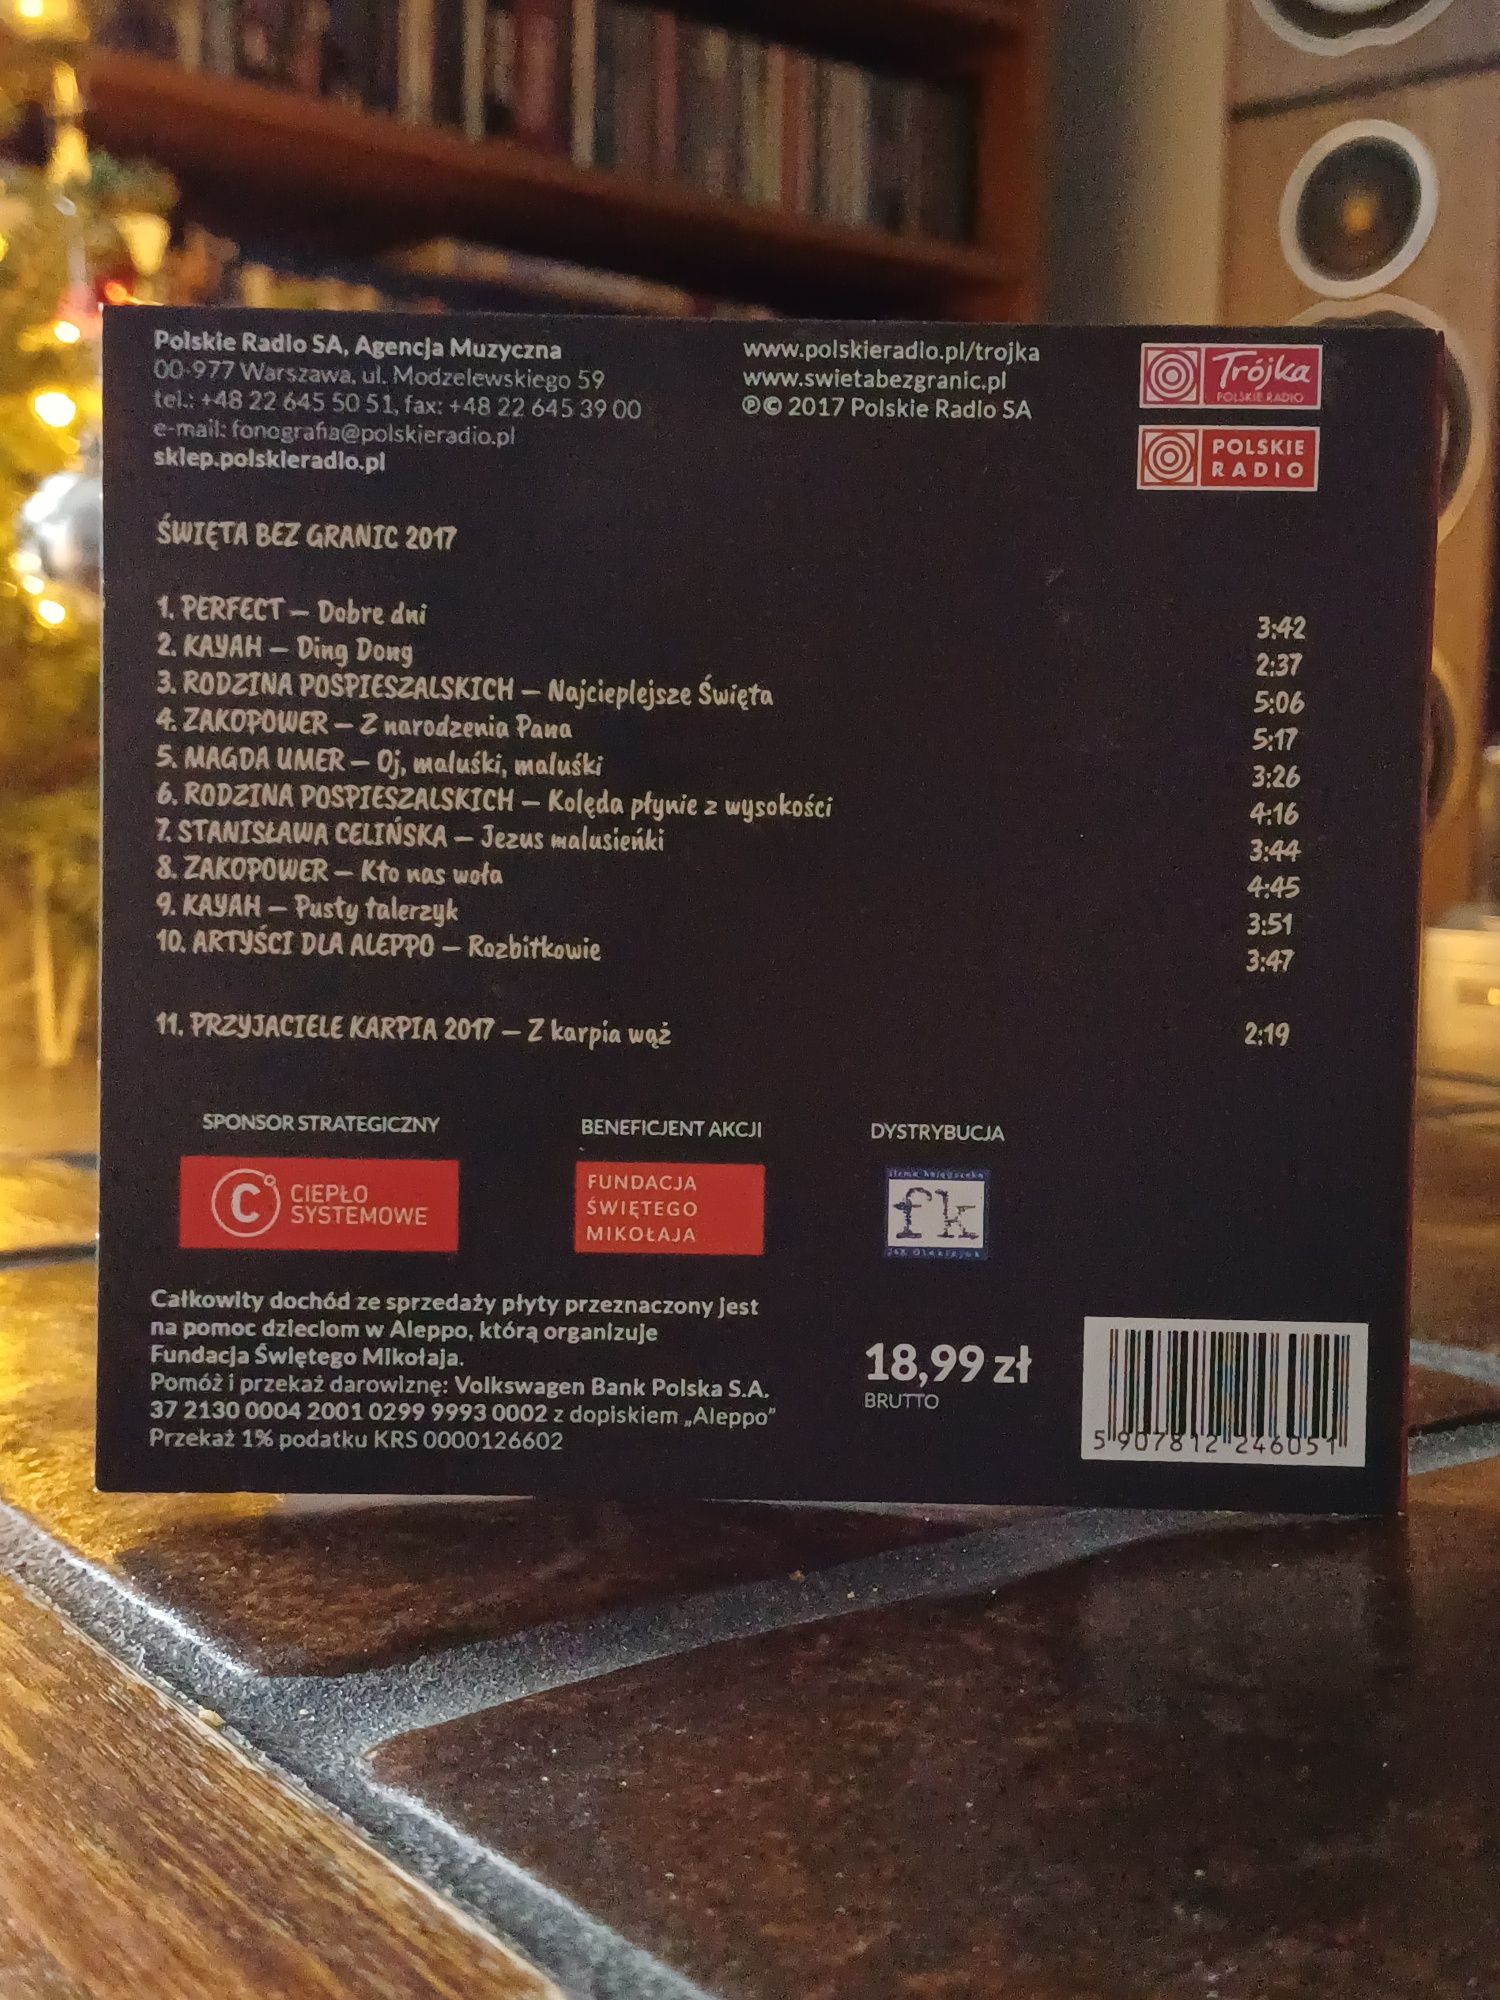 Święta bez granic 2017 - CD kolędy